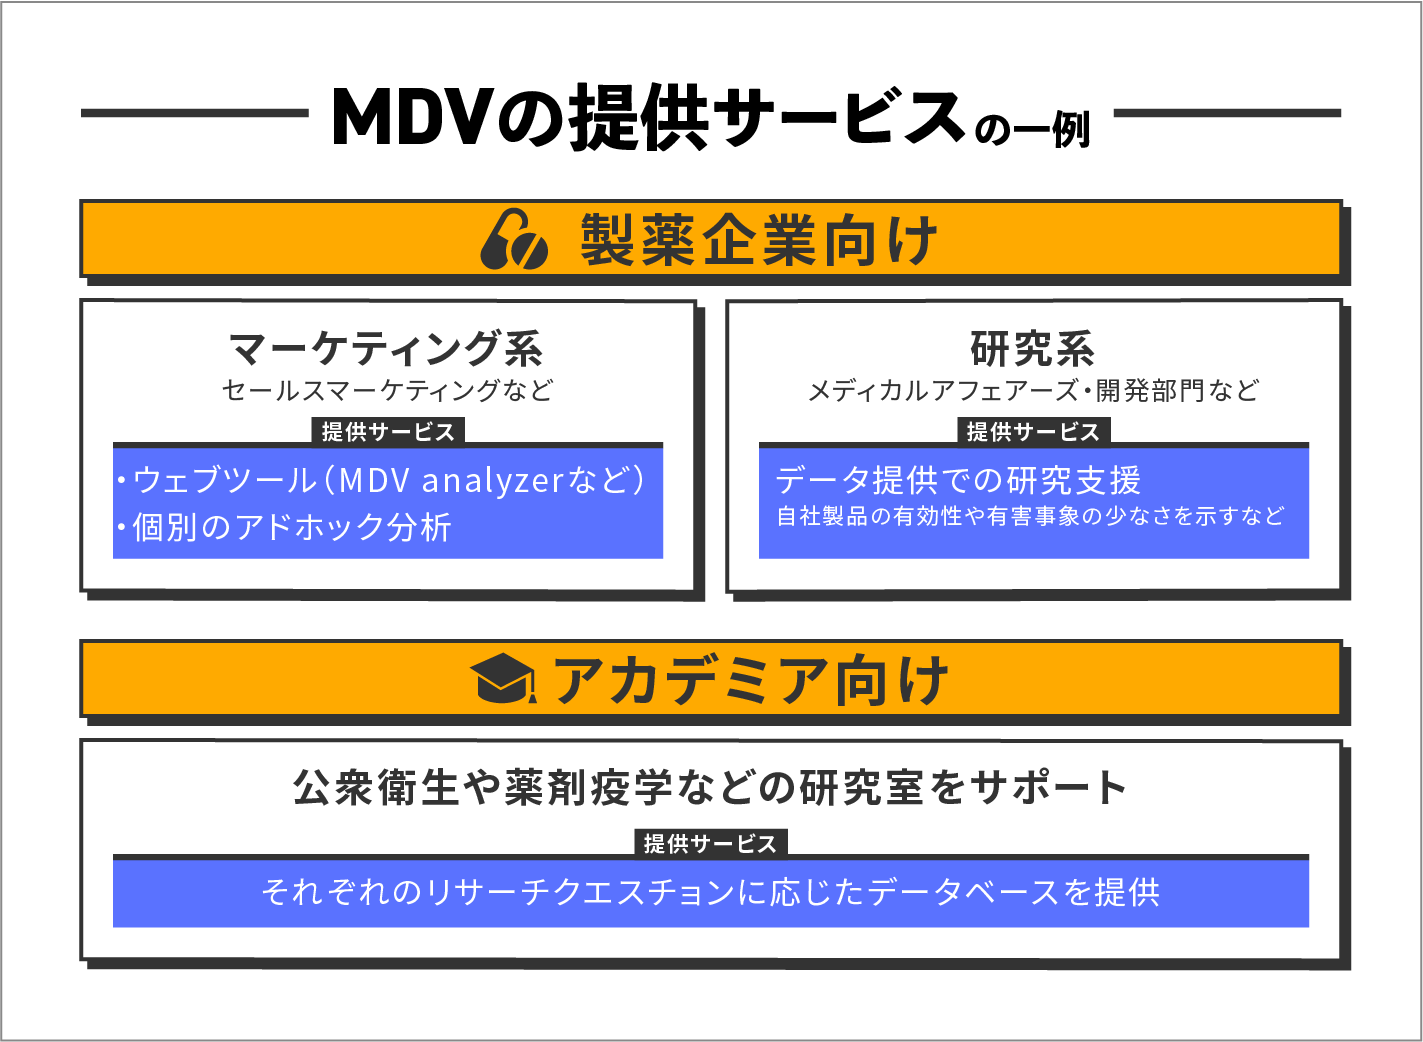 MDVの提供サービスの一例